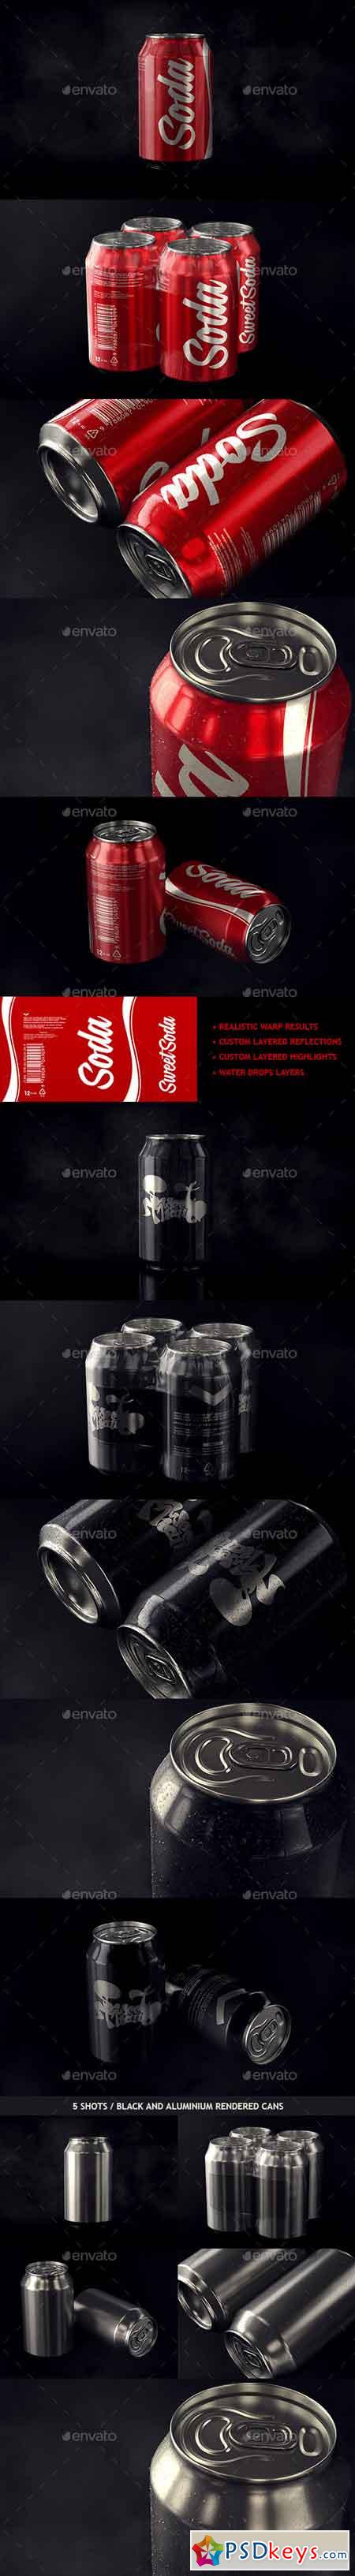 Photorealistic Aluminum Soda Can Mockup 9810580